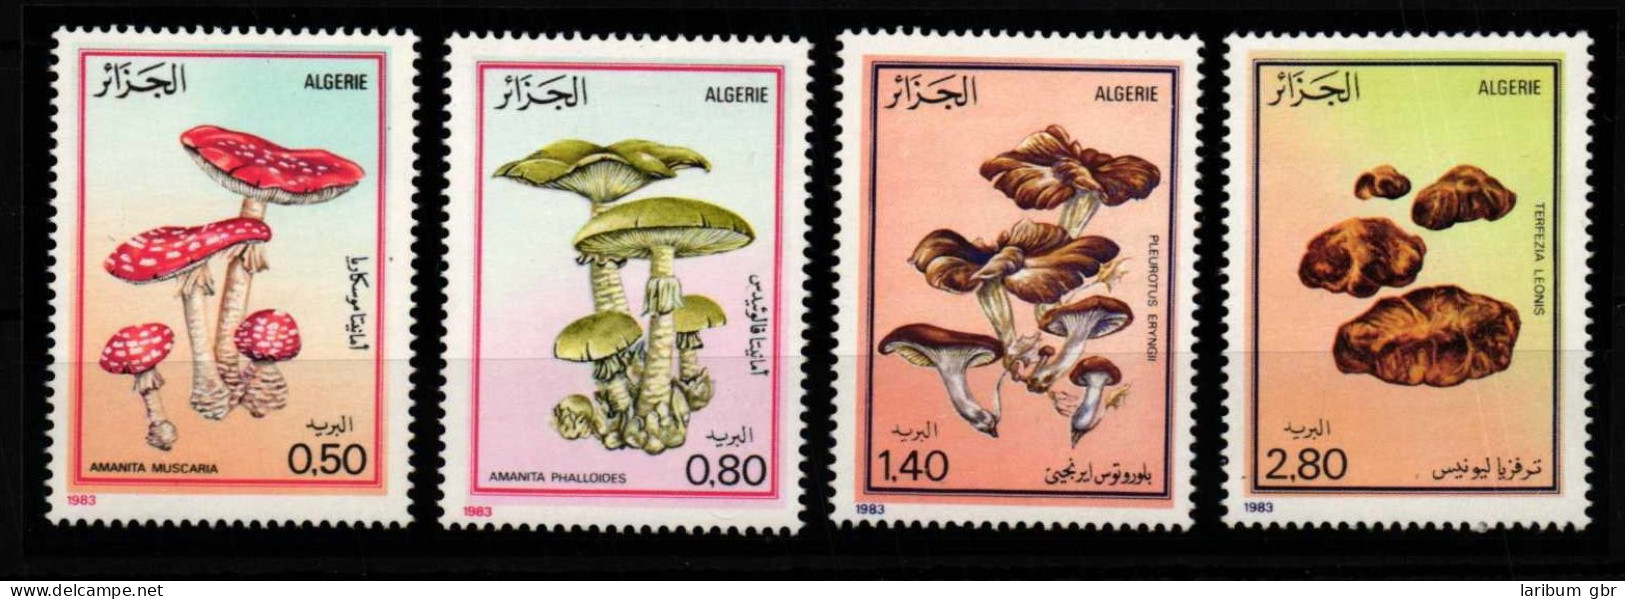 Algerien 827-830 Postfrisch Pilze #HQ333 - Algeria (1962-...)